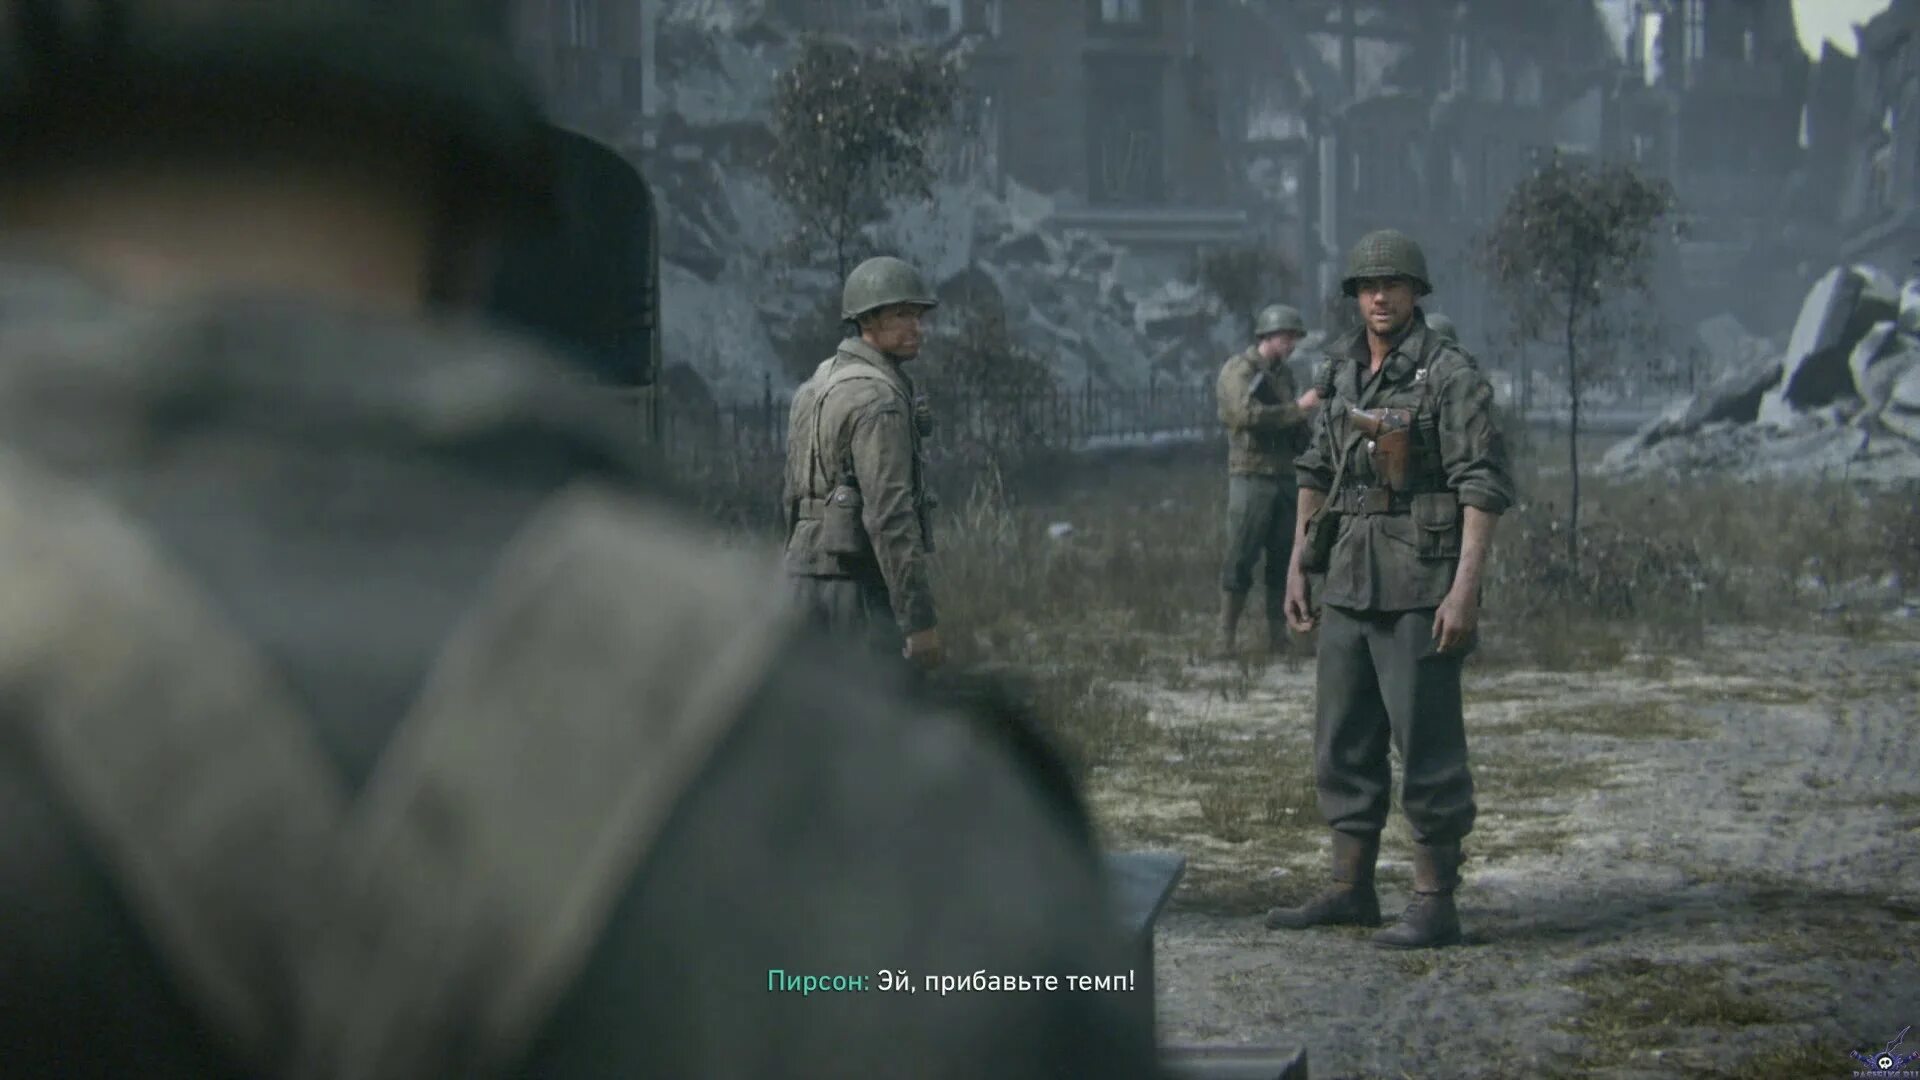 Steaminternal contextlnit call of duty ww2. Call of Duty: WWII. Джош Дюамель Call of Duty WWII. Call of Duty WWII скрины. Call of Duty ww2 побочный ущерб.